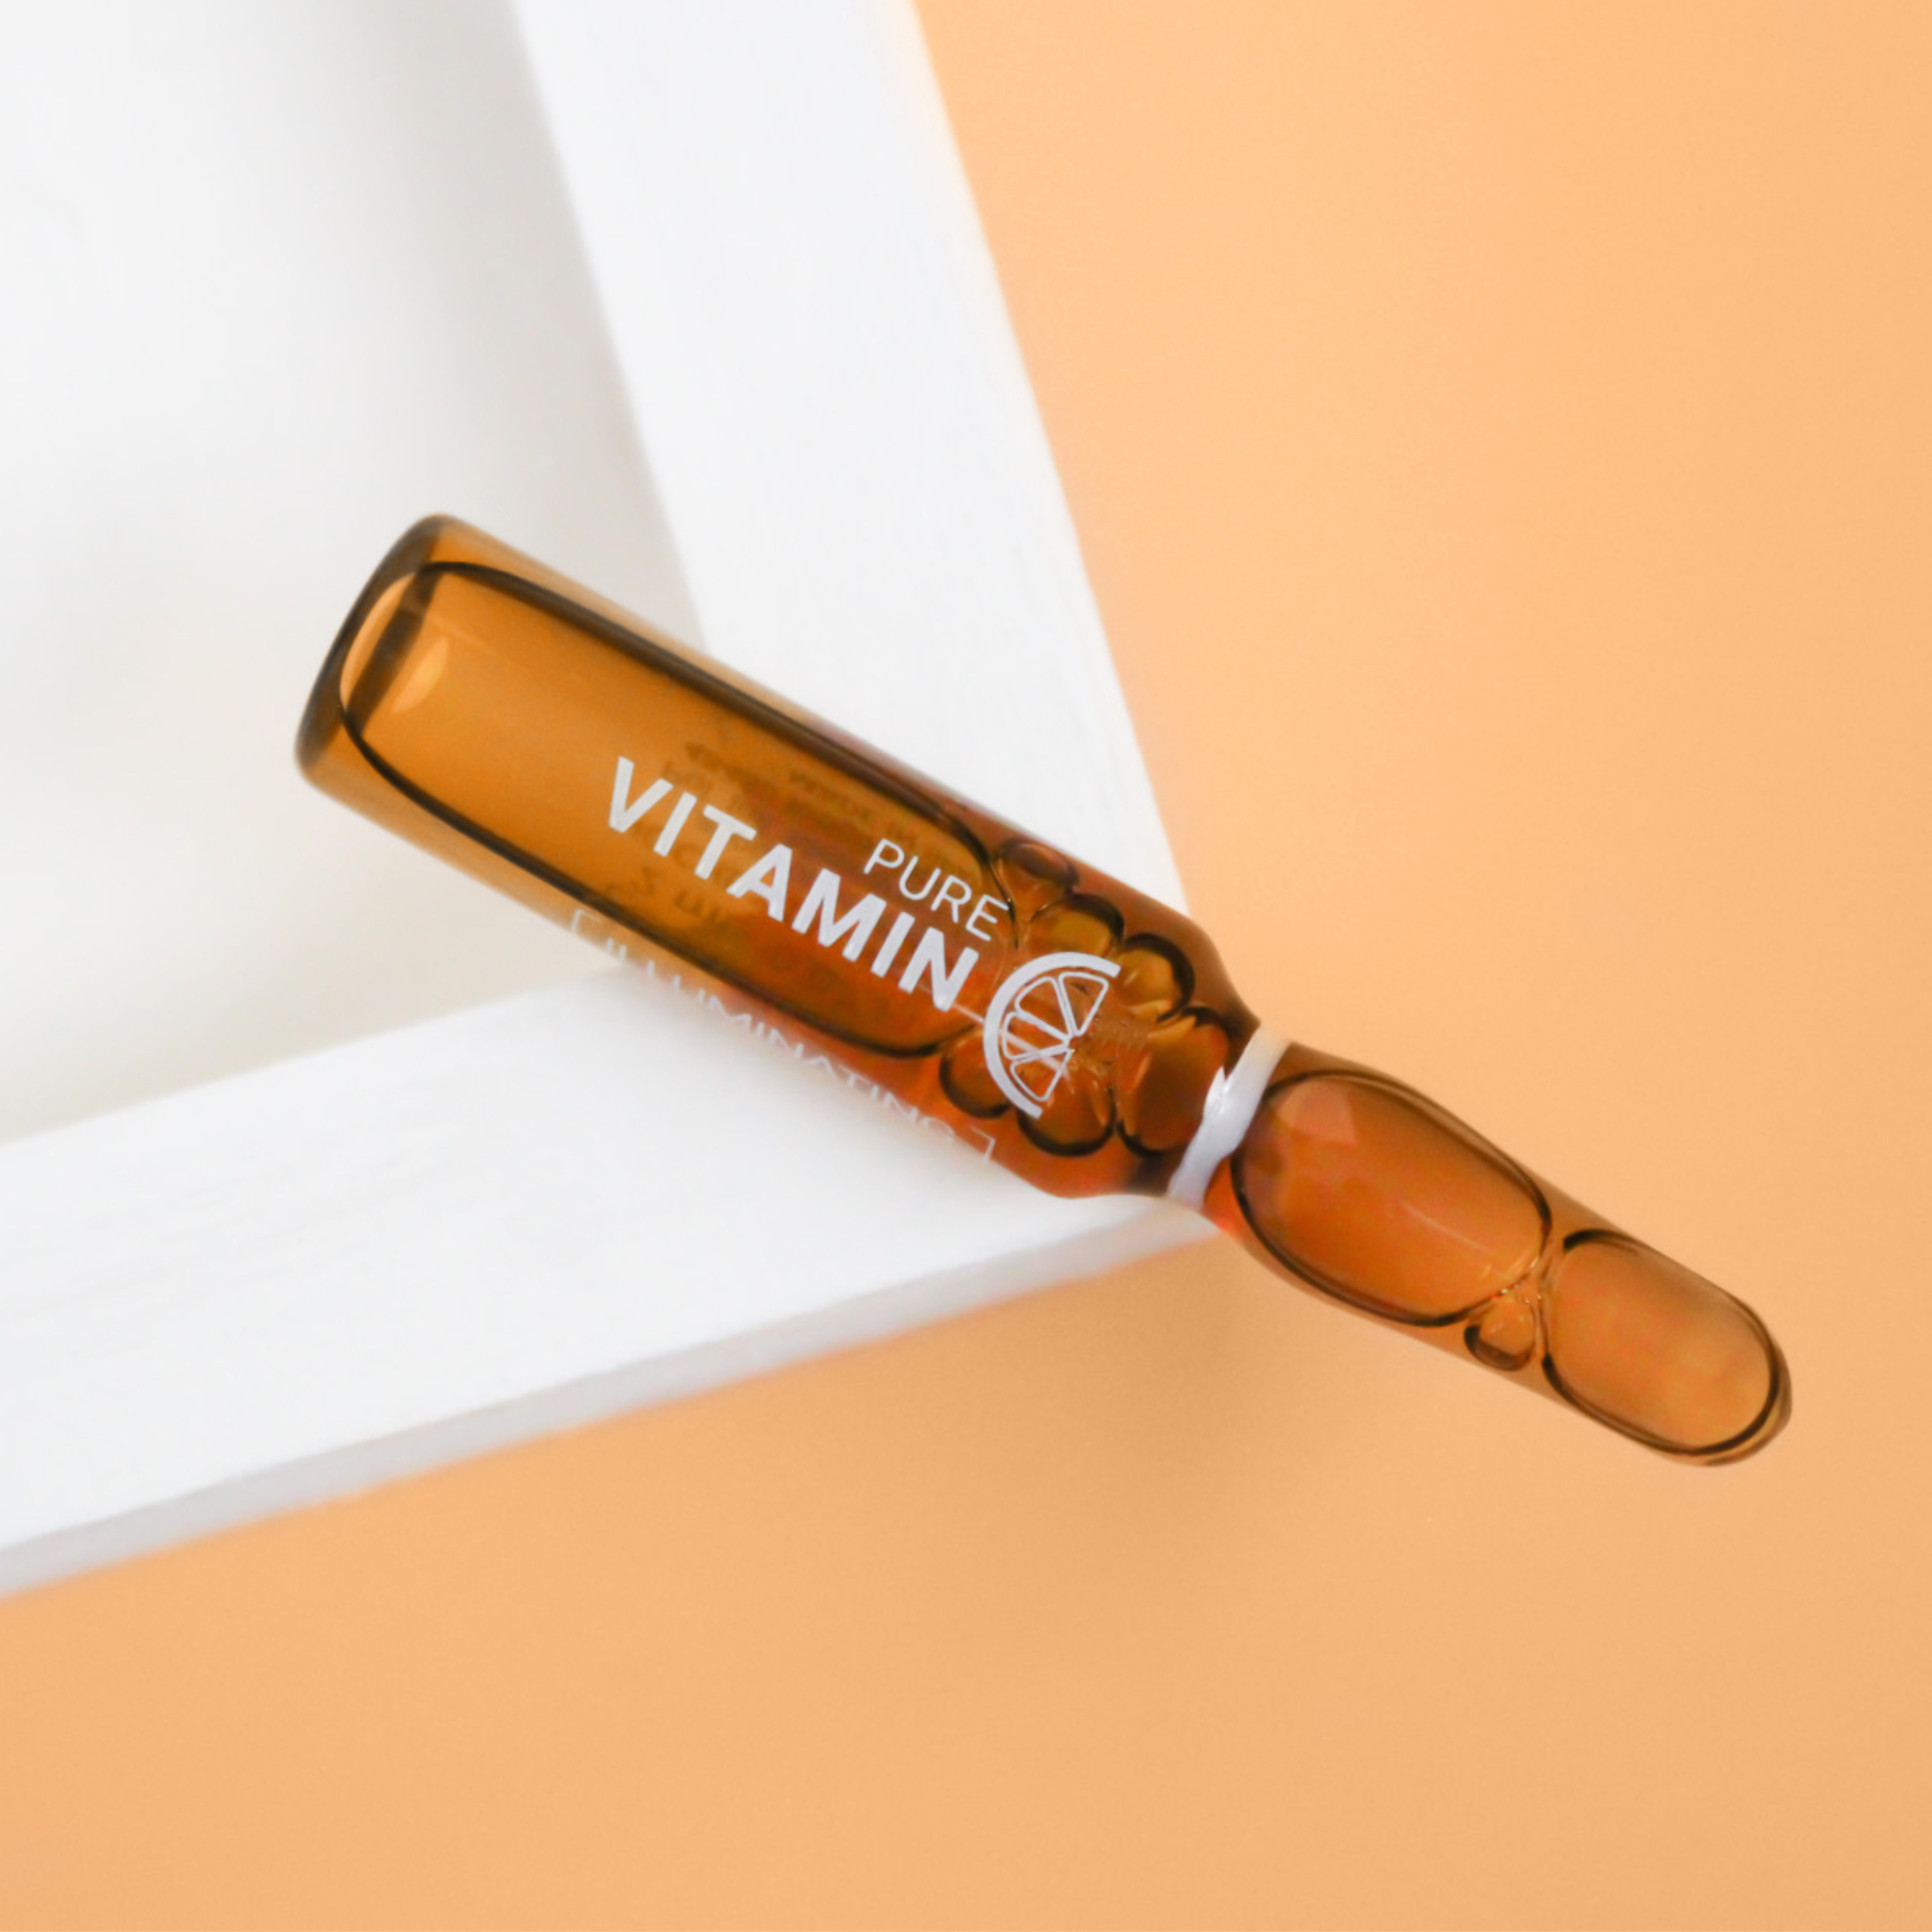 Vitamin C Ampoule on light orange background